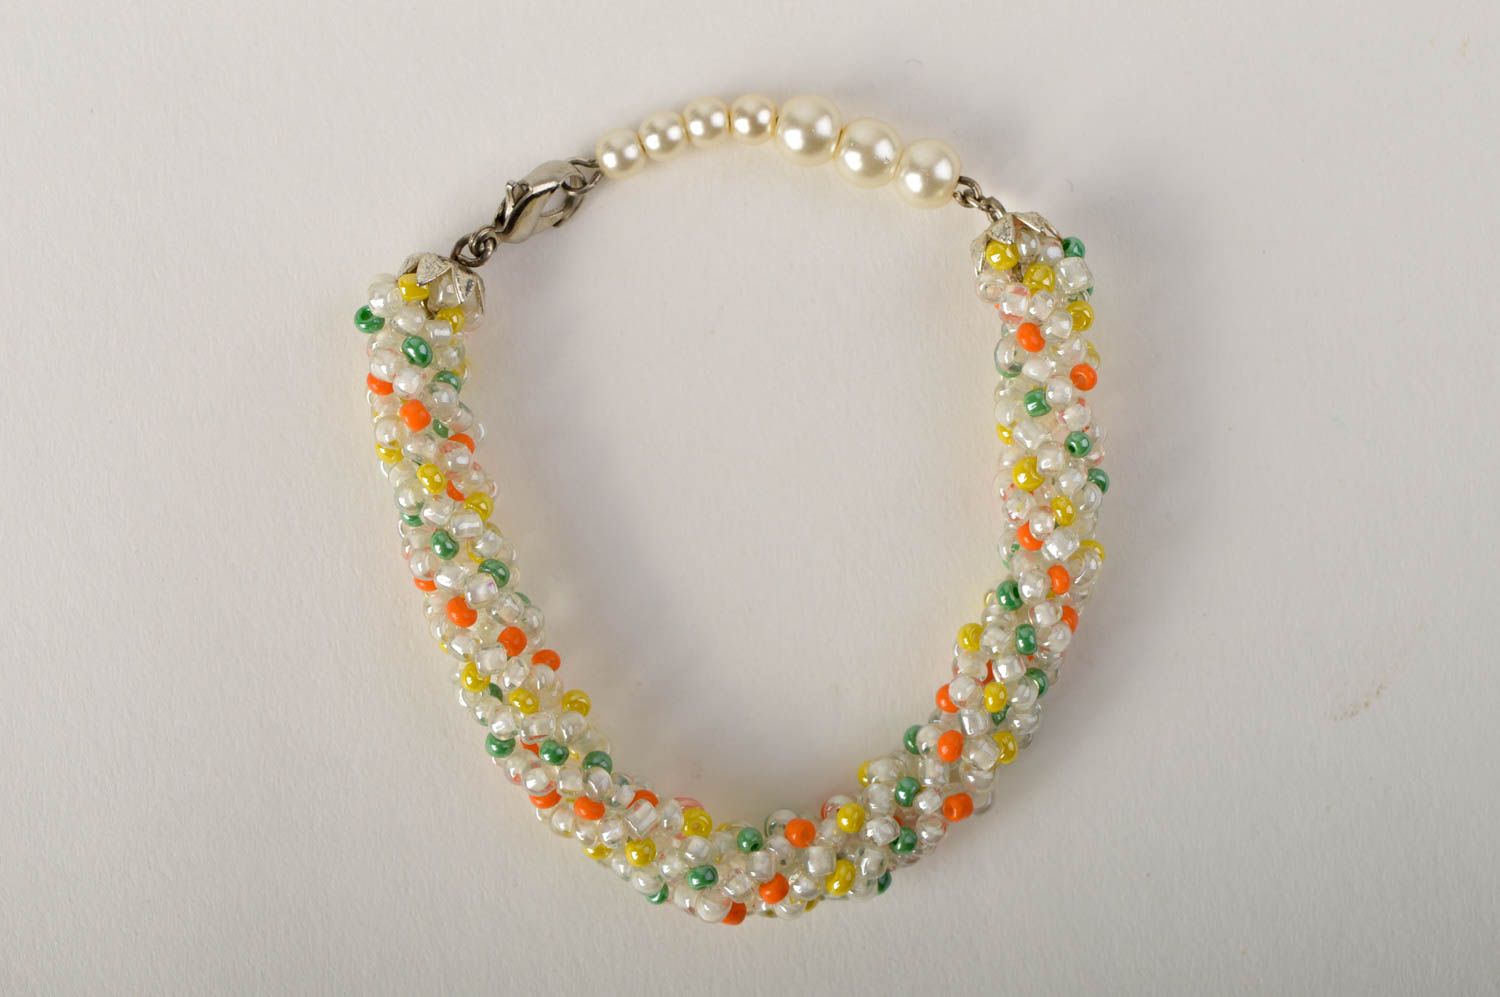 Unusual handmadewrist bracelet bead weaving beaded cord bracelet gifts for her photo 2